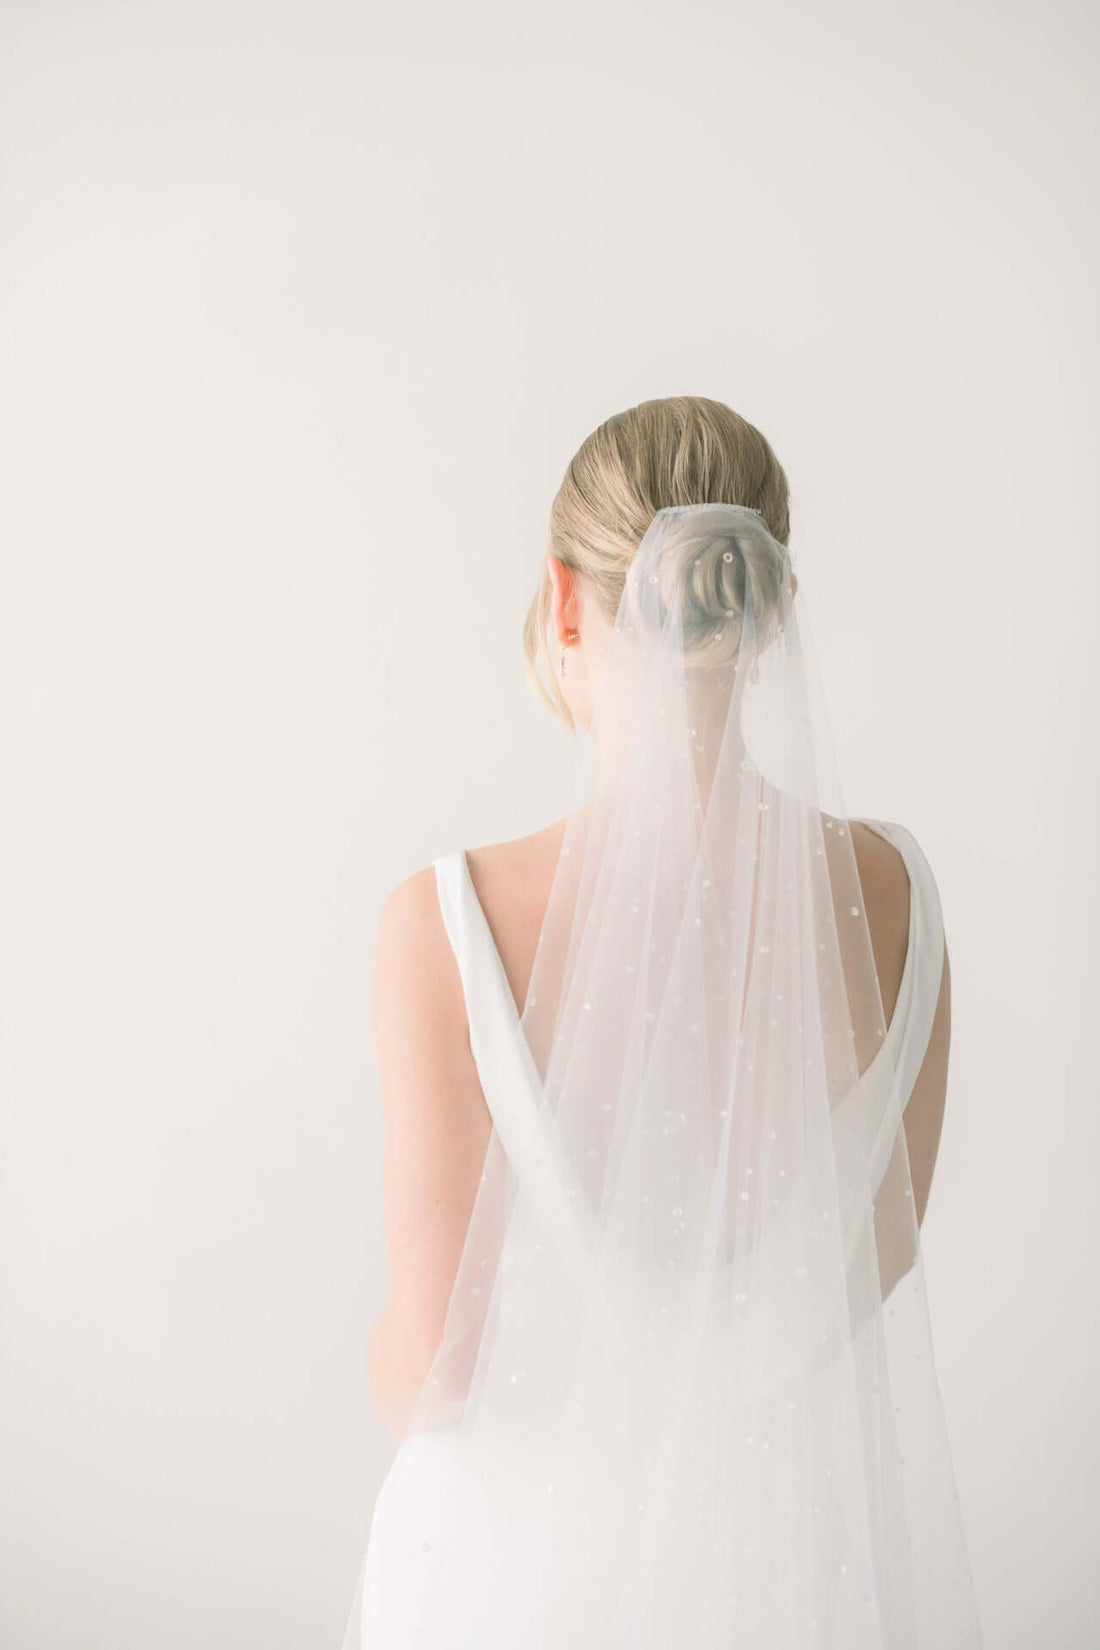 Does wedding veil go above or below bun?